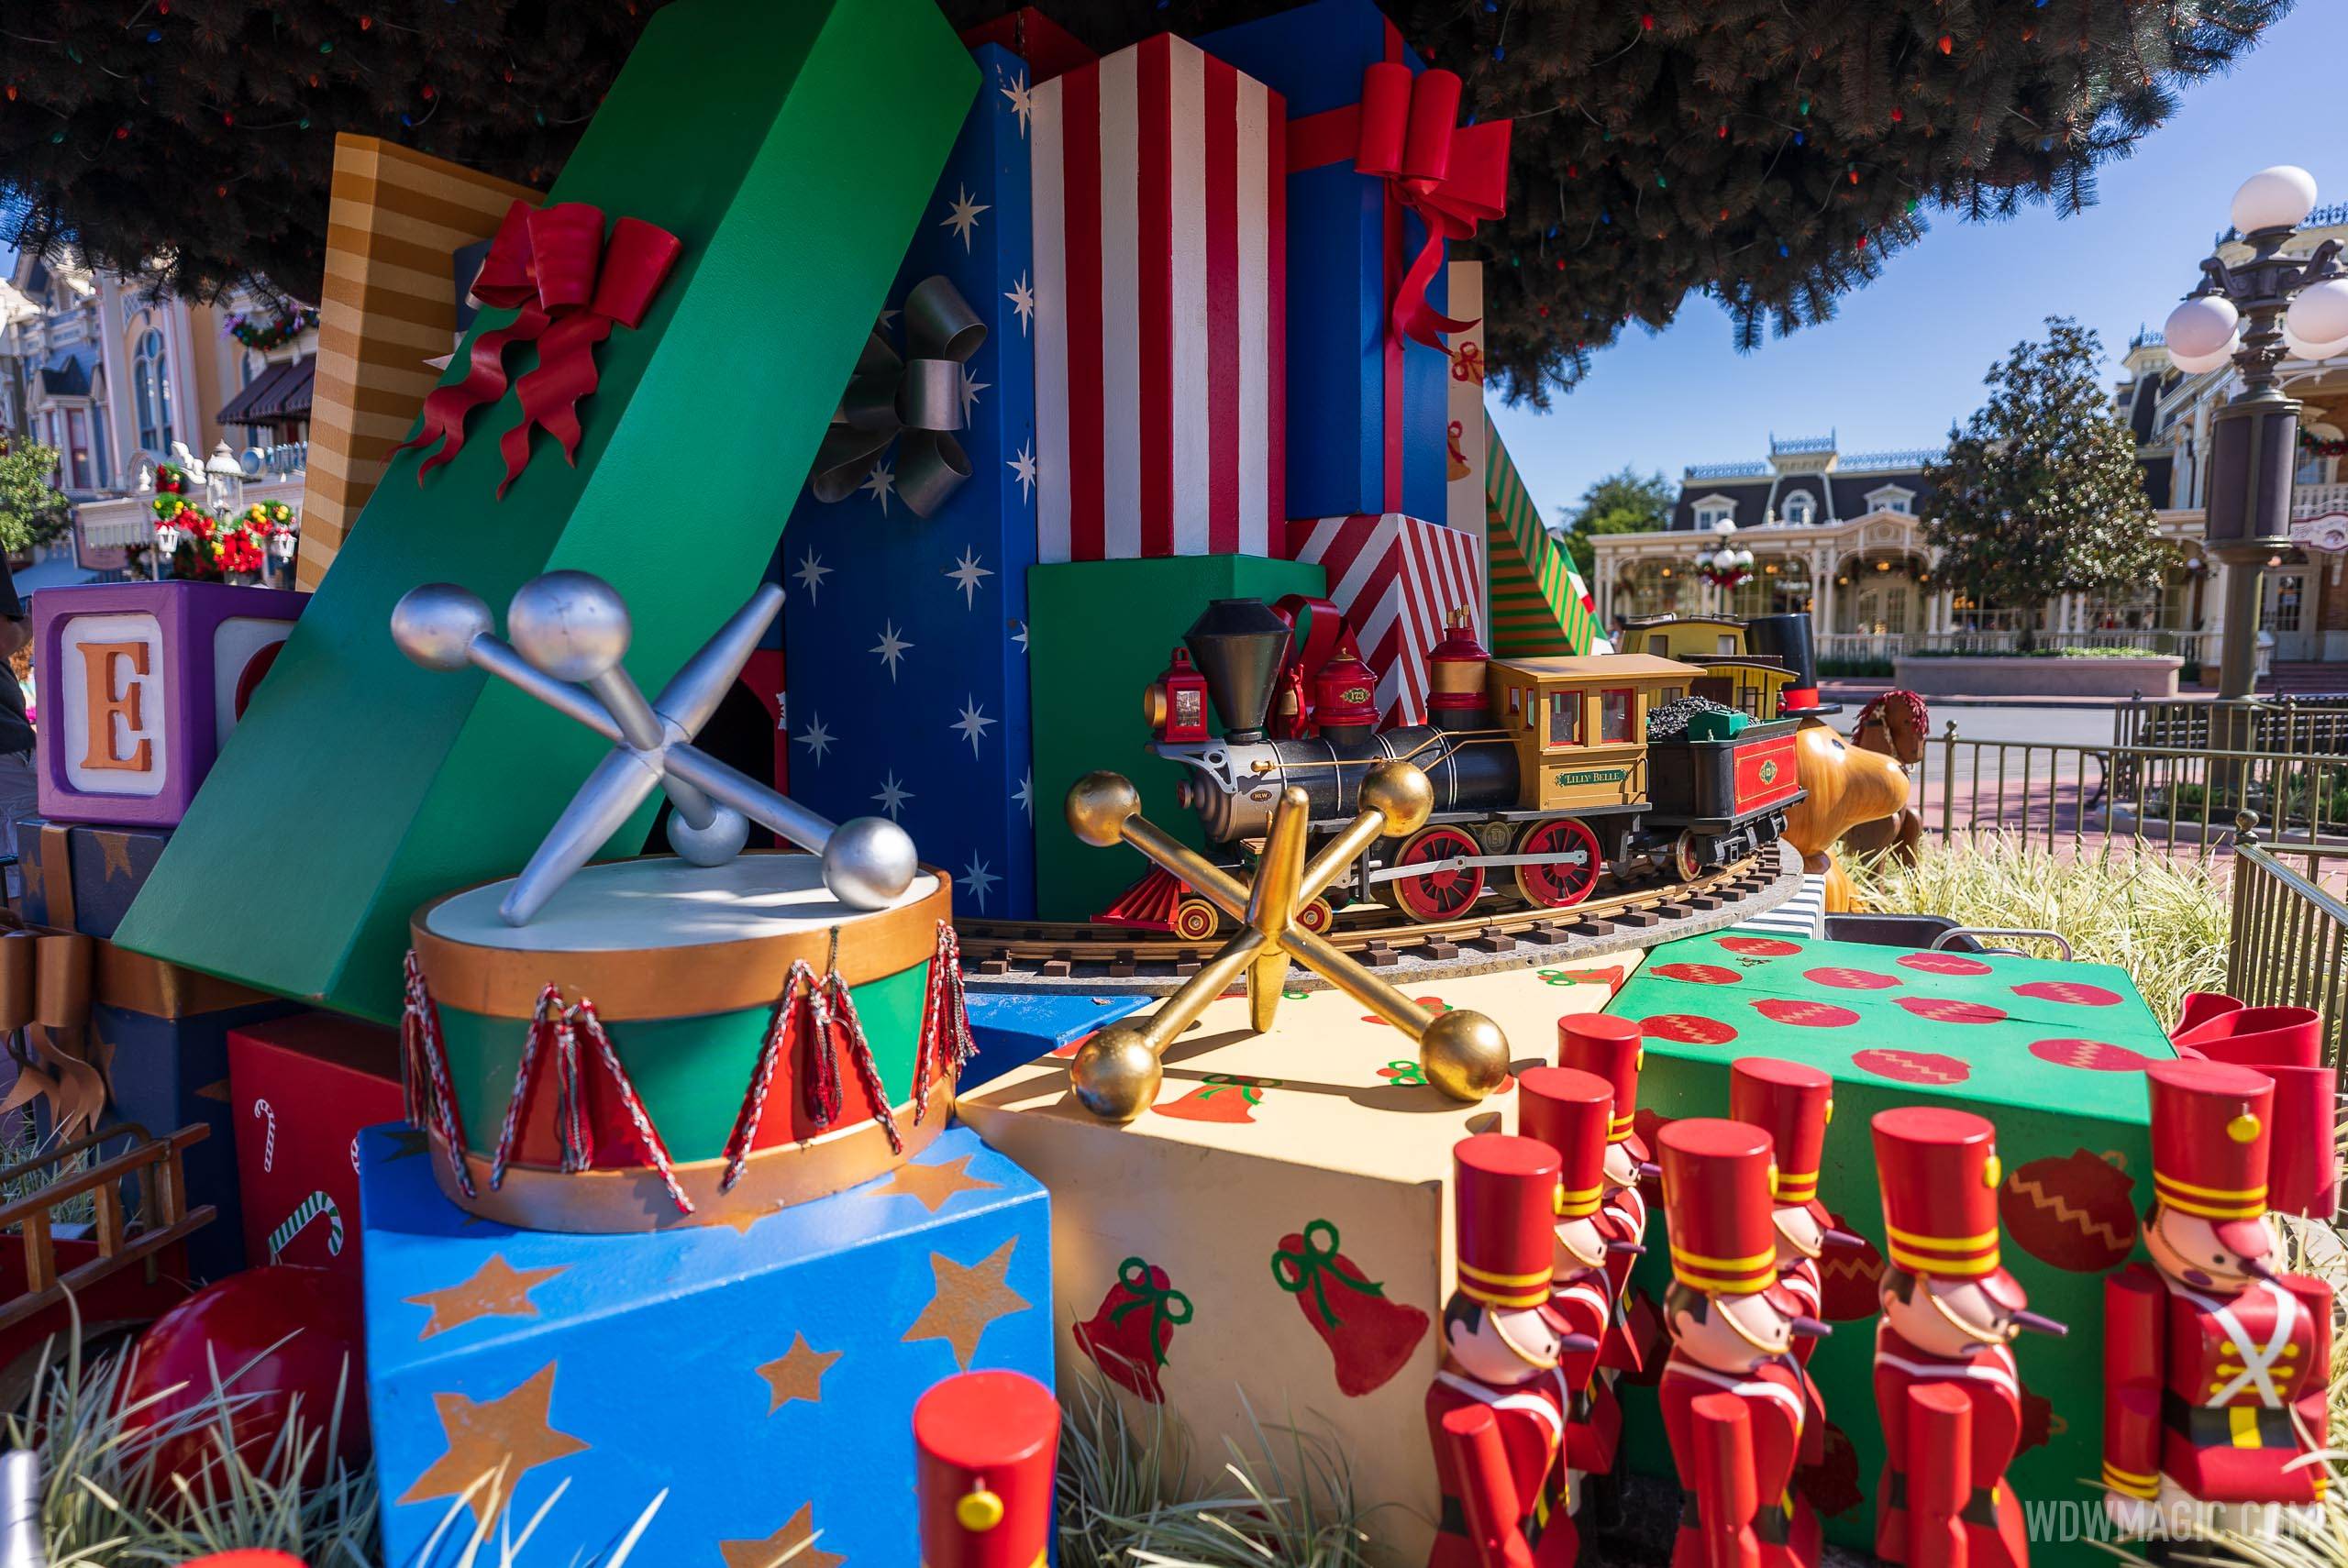 Magic Kingdom Christmas Holiday decorations 2020